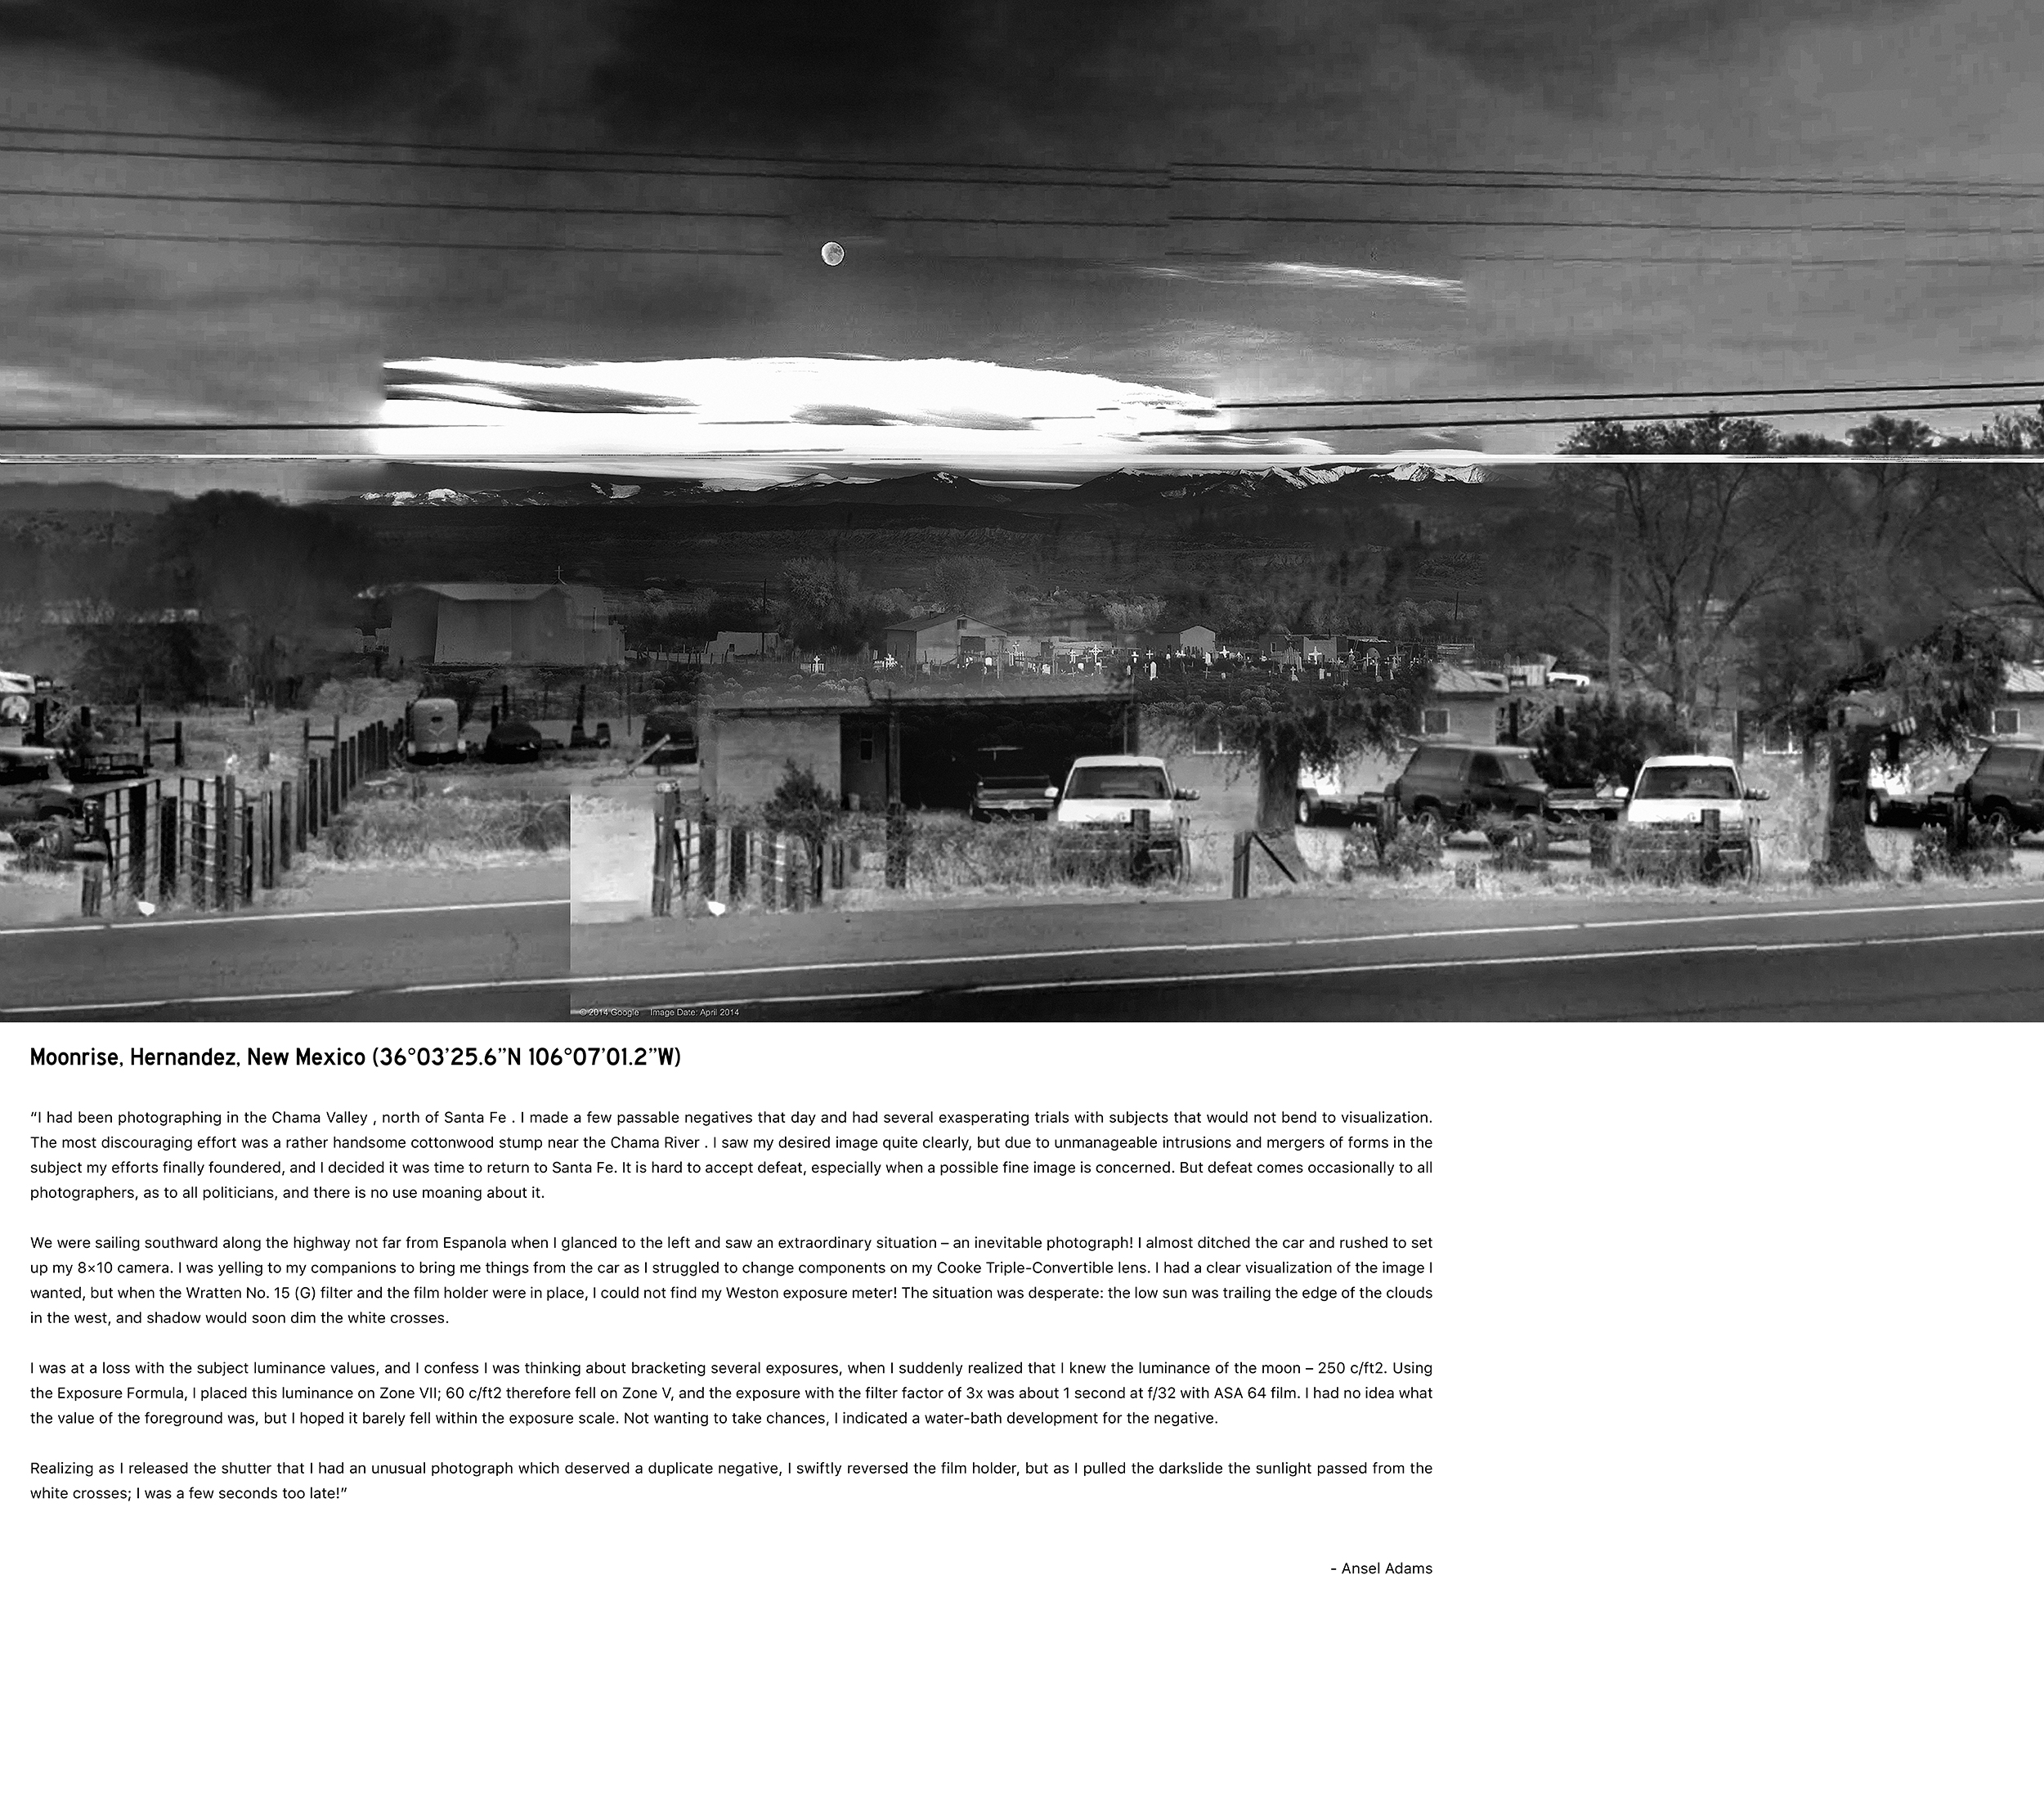 Moonrise, Hernandez, New Mexico (36°03’25.6″N 106°07’01.2″W)